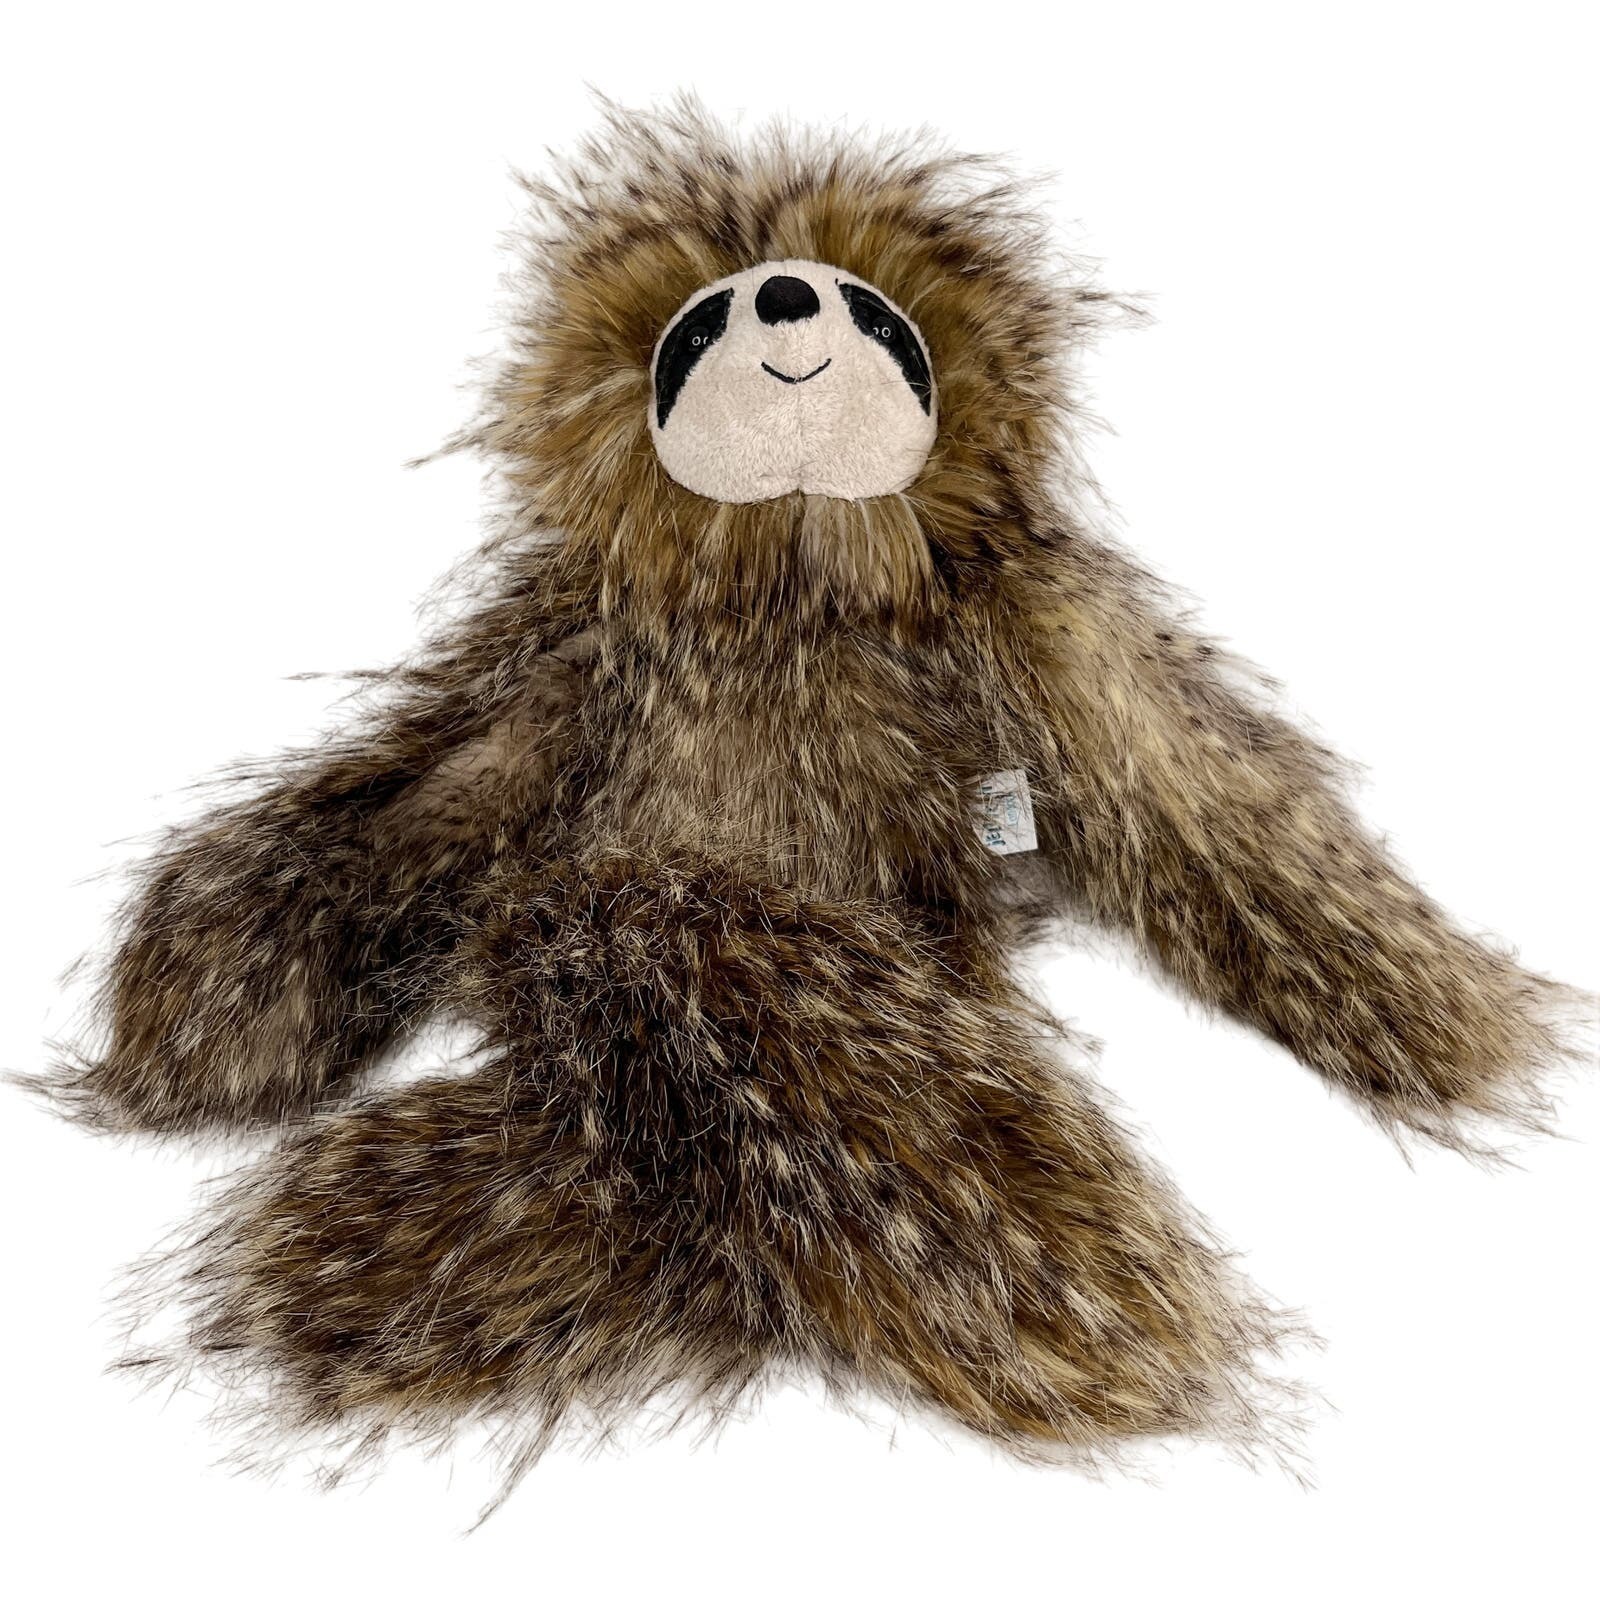 Jellycat London Sloth Stuffed Animal 16" - $23.00